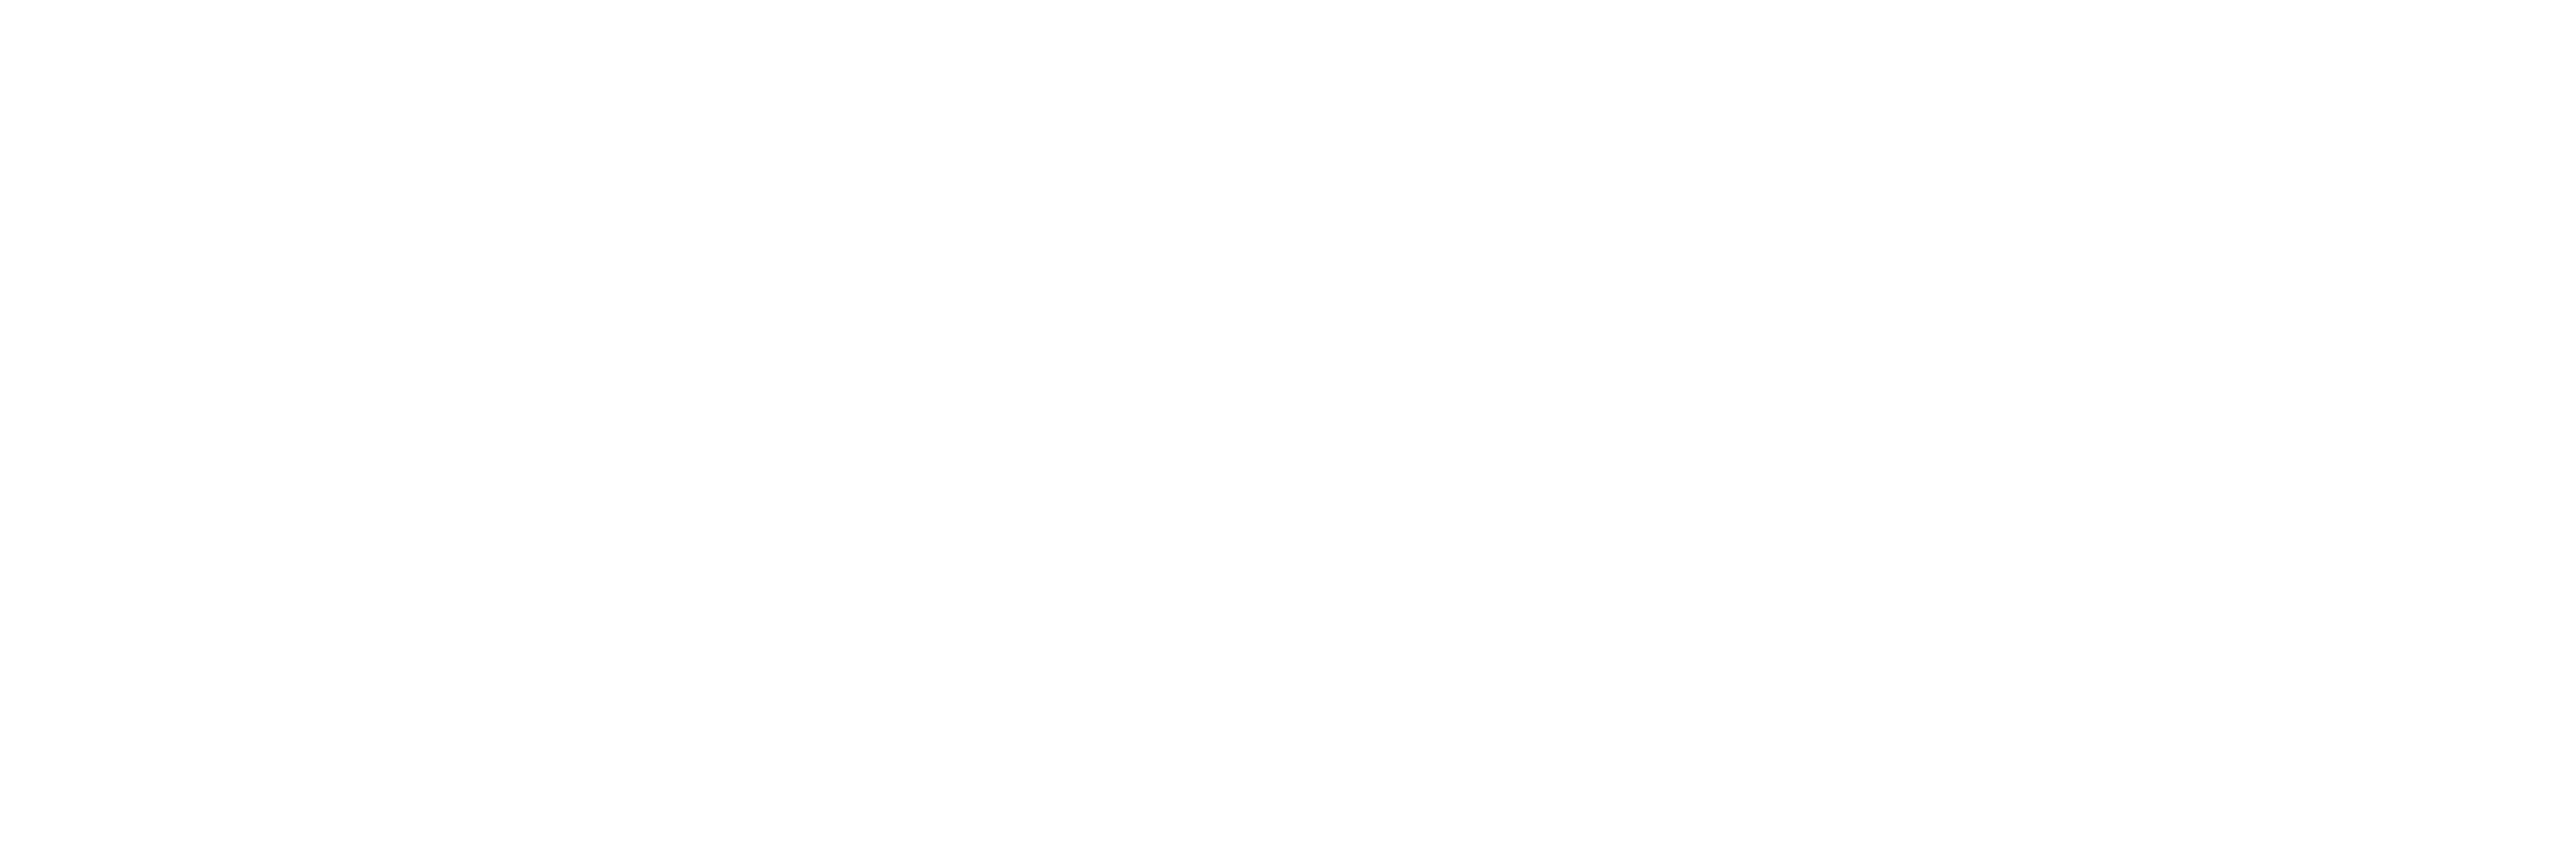 Cascade Village Dental_Linear_White